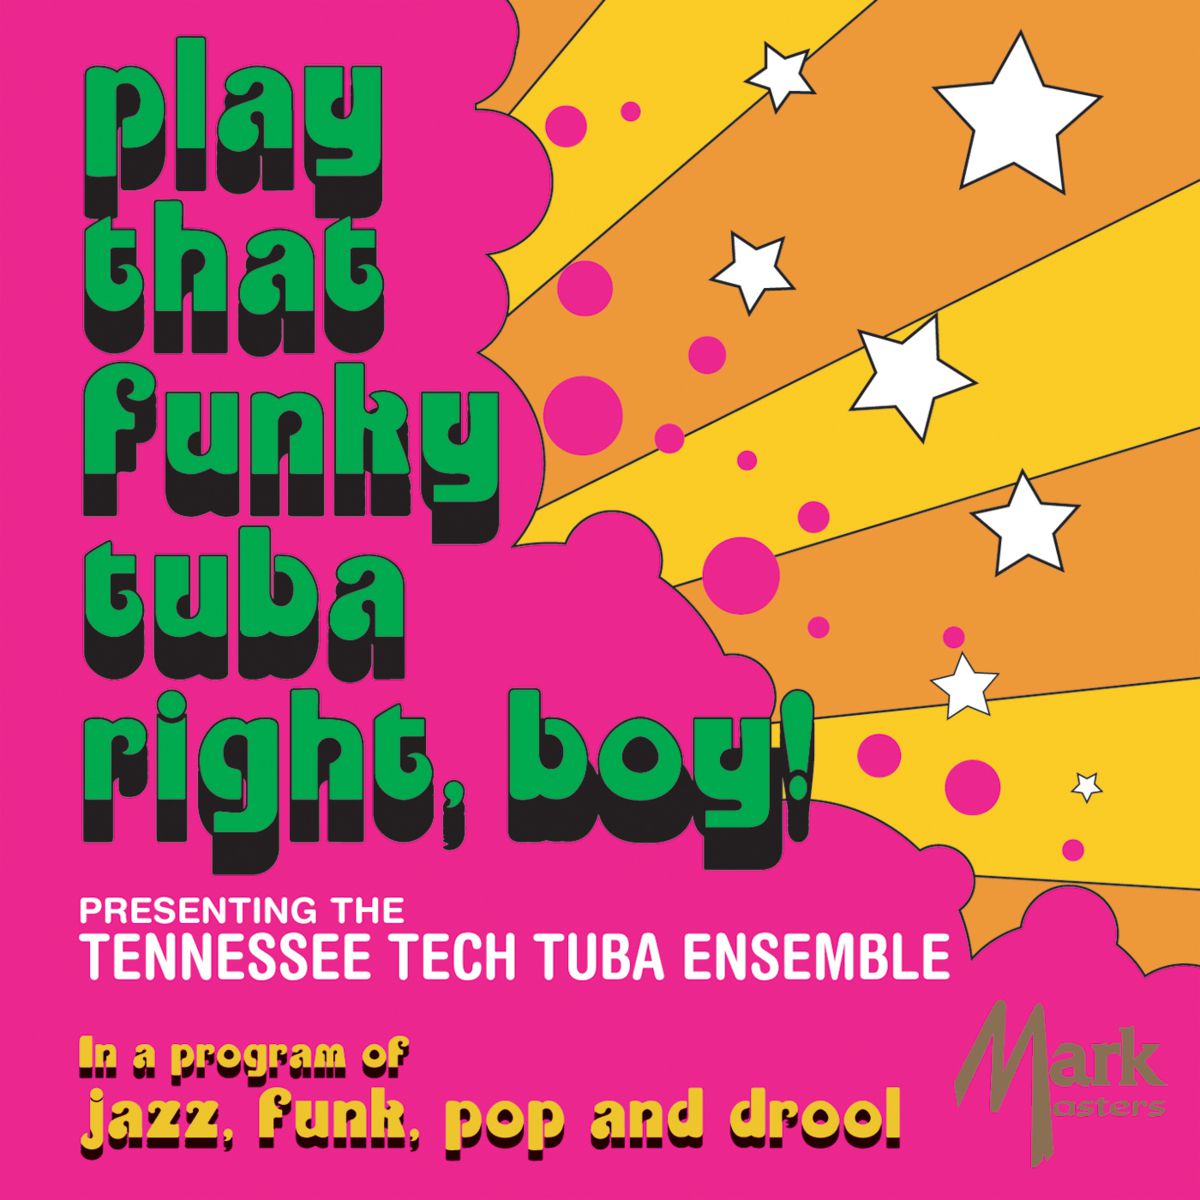 Play That Funky Tuba Right, Boy! - hacer clic aqu